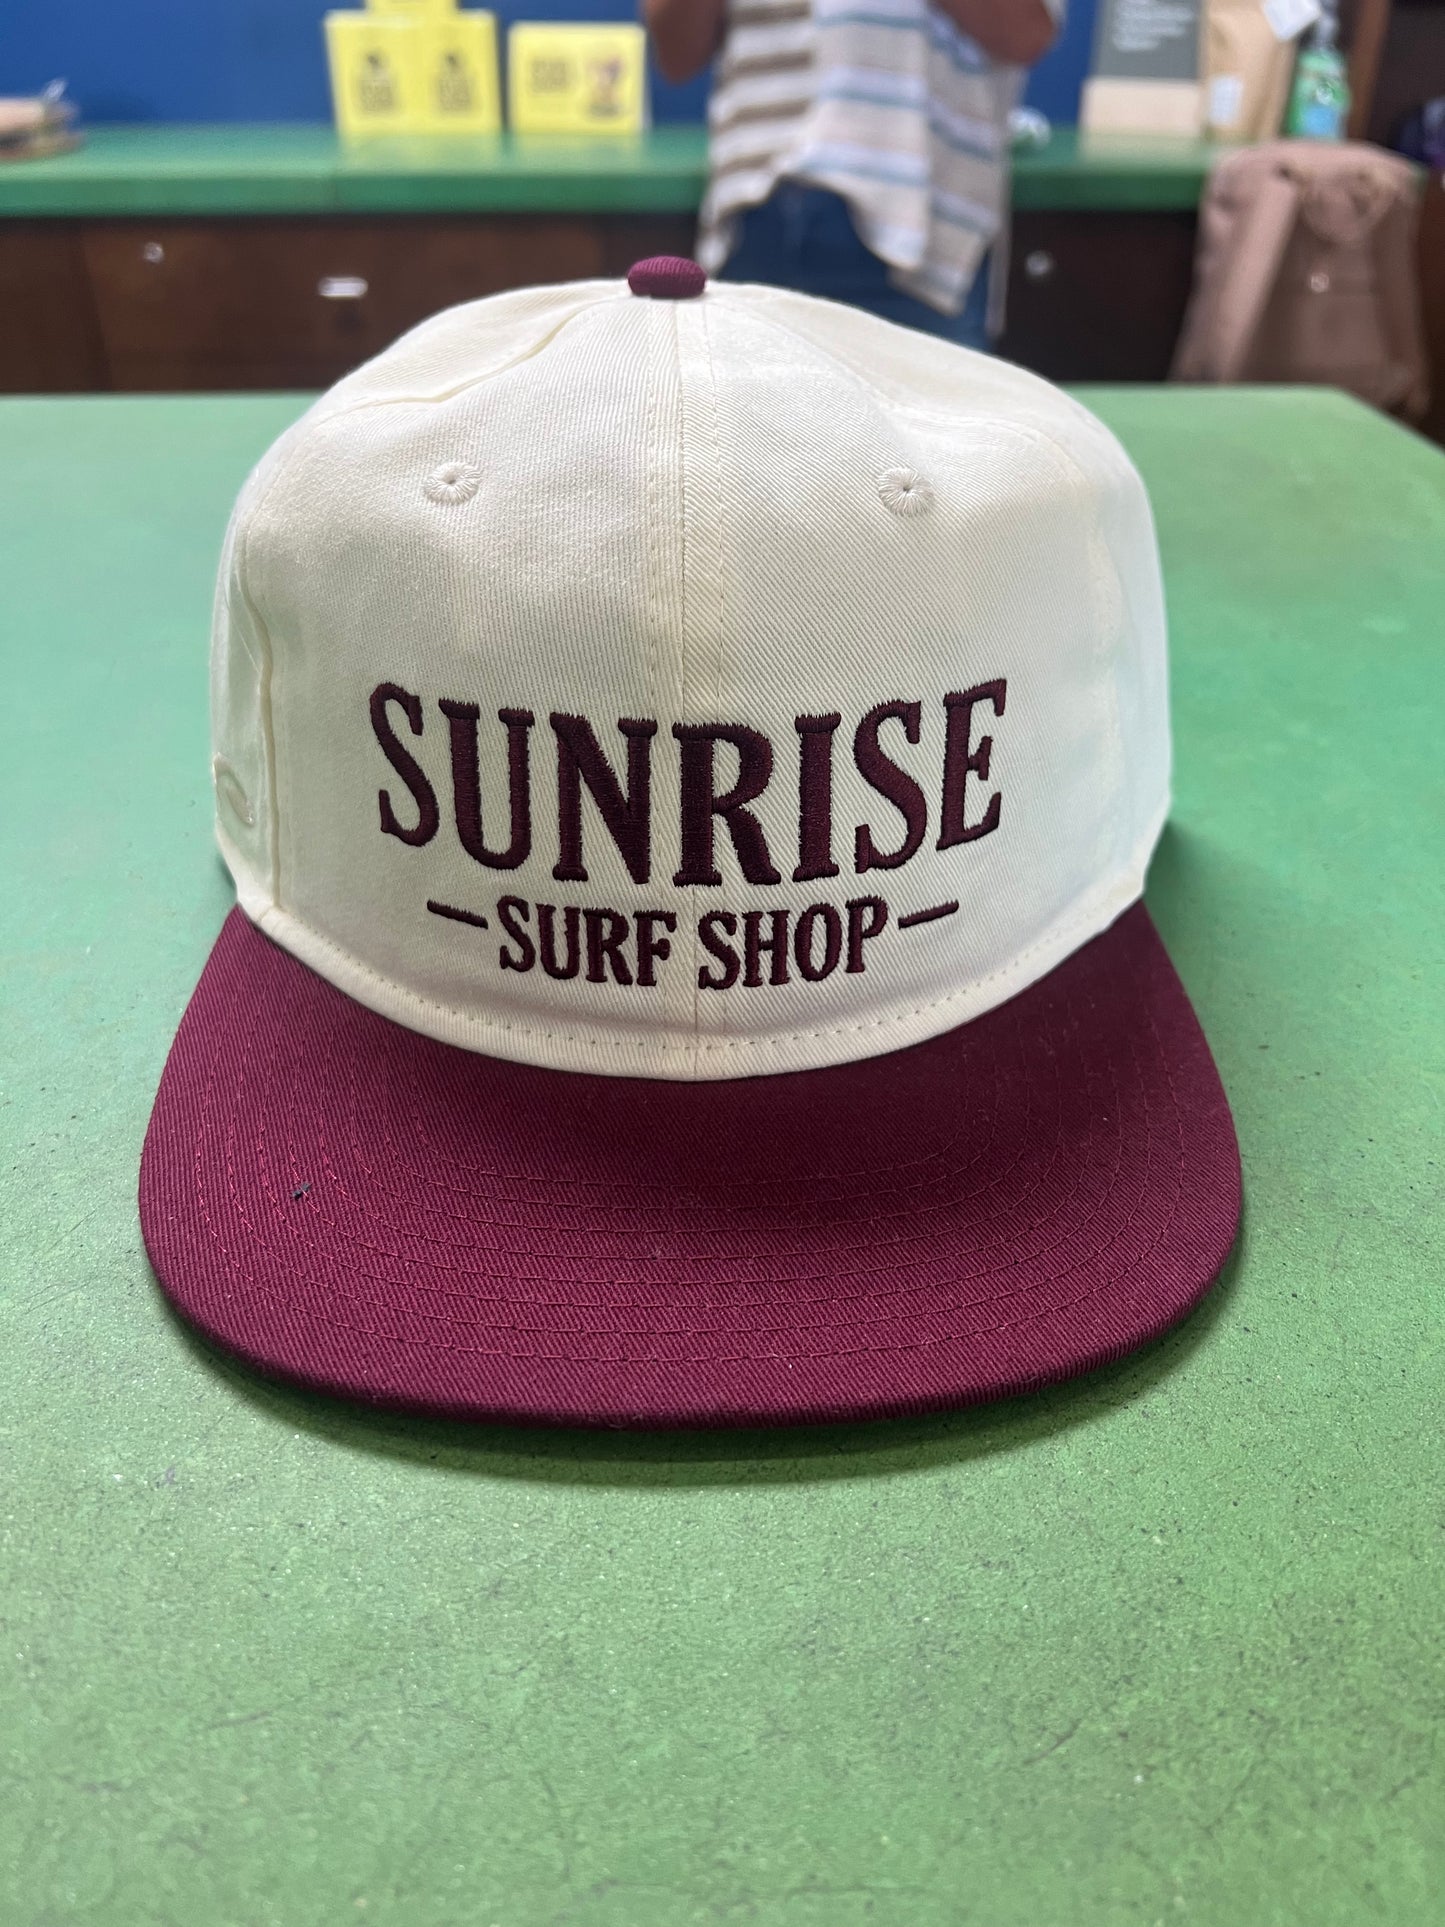 Sunrise Sandlot Cap